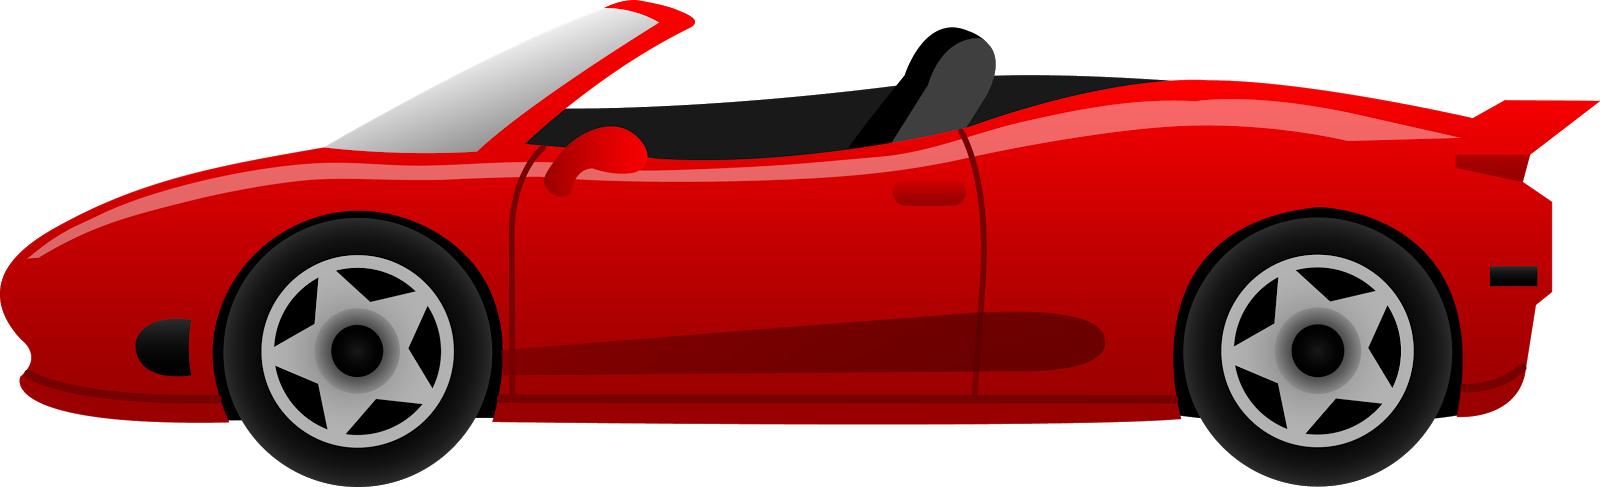 Sports car side profile outline clipart - ClipartFox